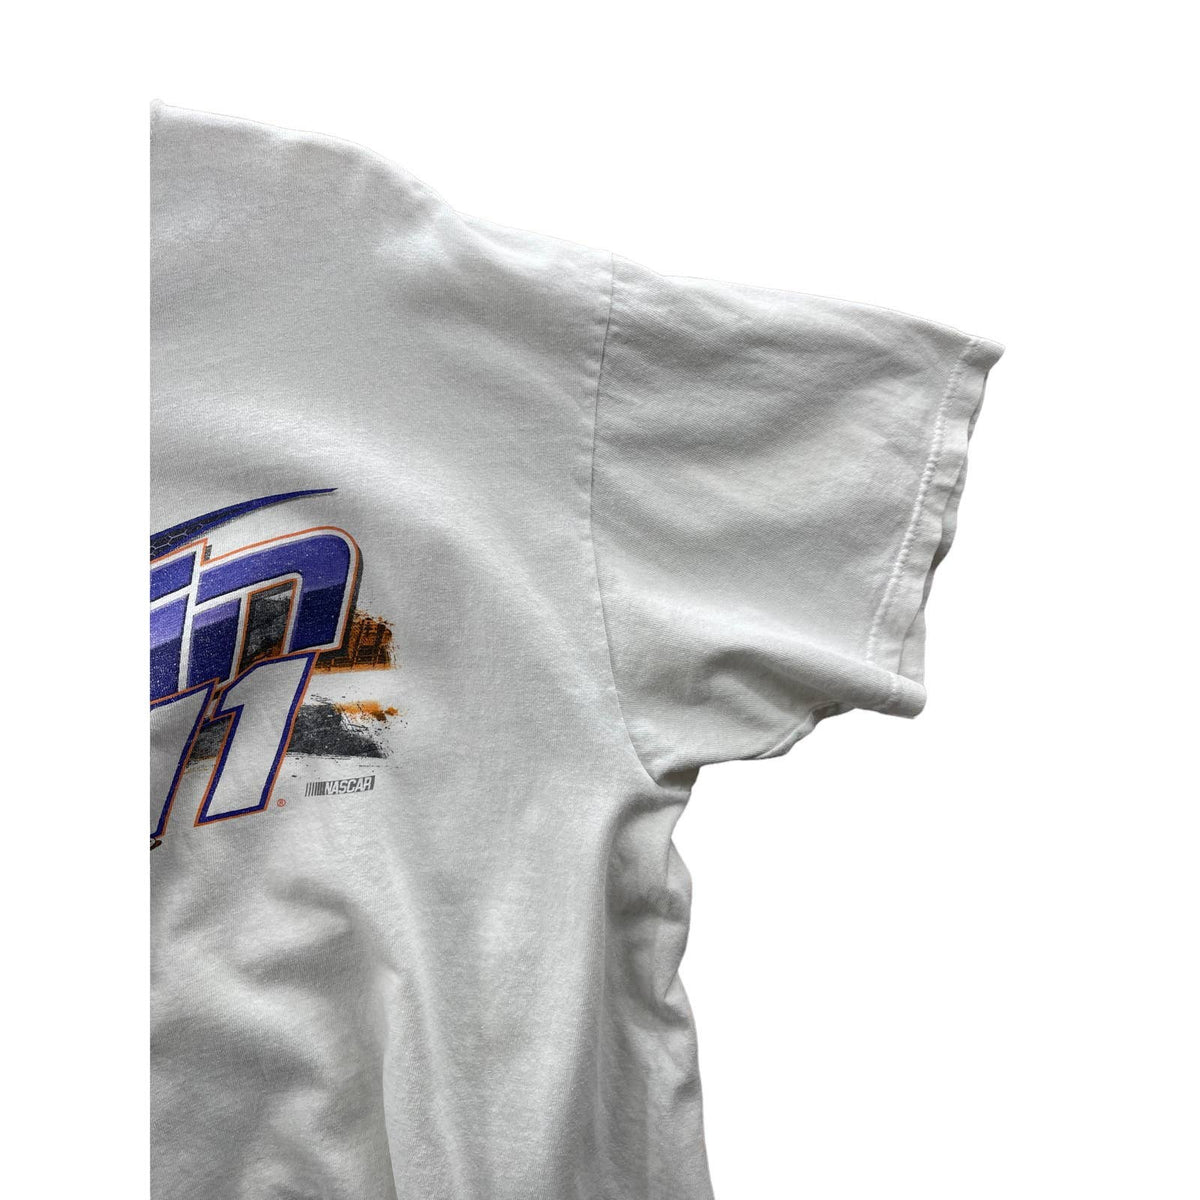 Vintage 2000's Chase Authentics Denny Hamlin #11 Nascar Racing T-Shirt